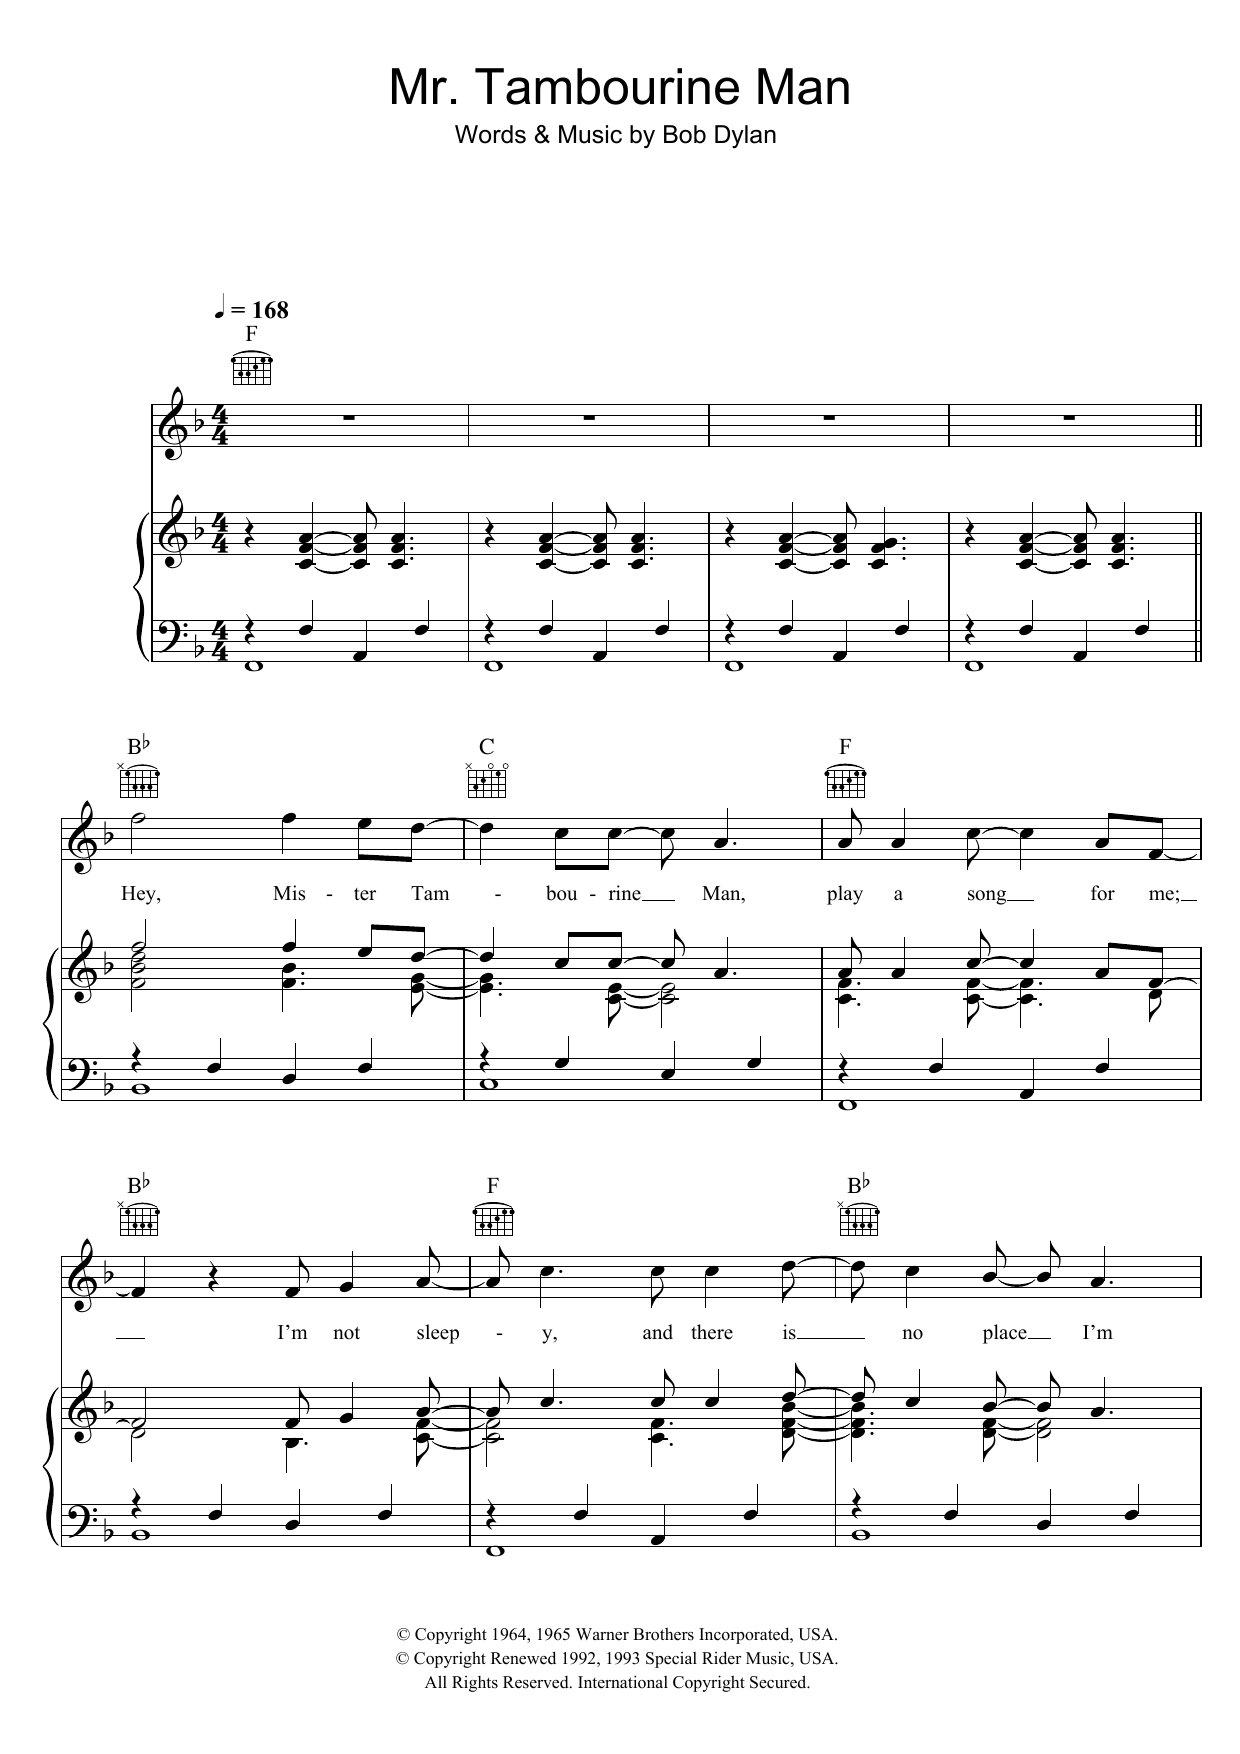 Bob Dylan Mr. Tambourine Man Sheet Music Notes & Chords for Melody Line, Lyrics & Chords - Download or Print PDF